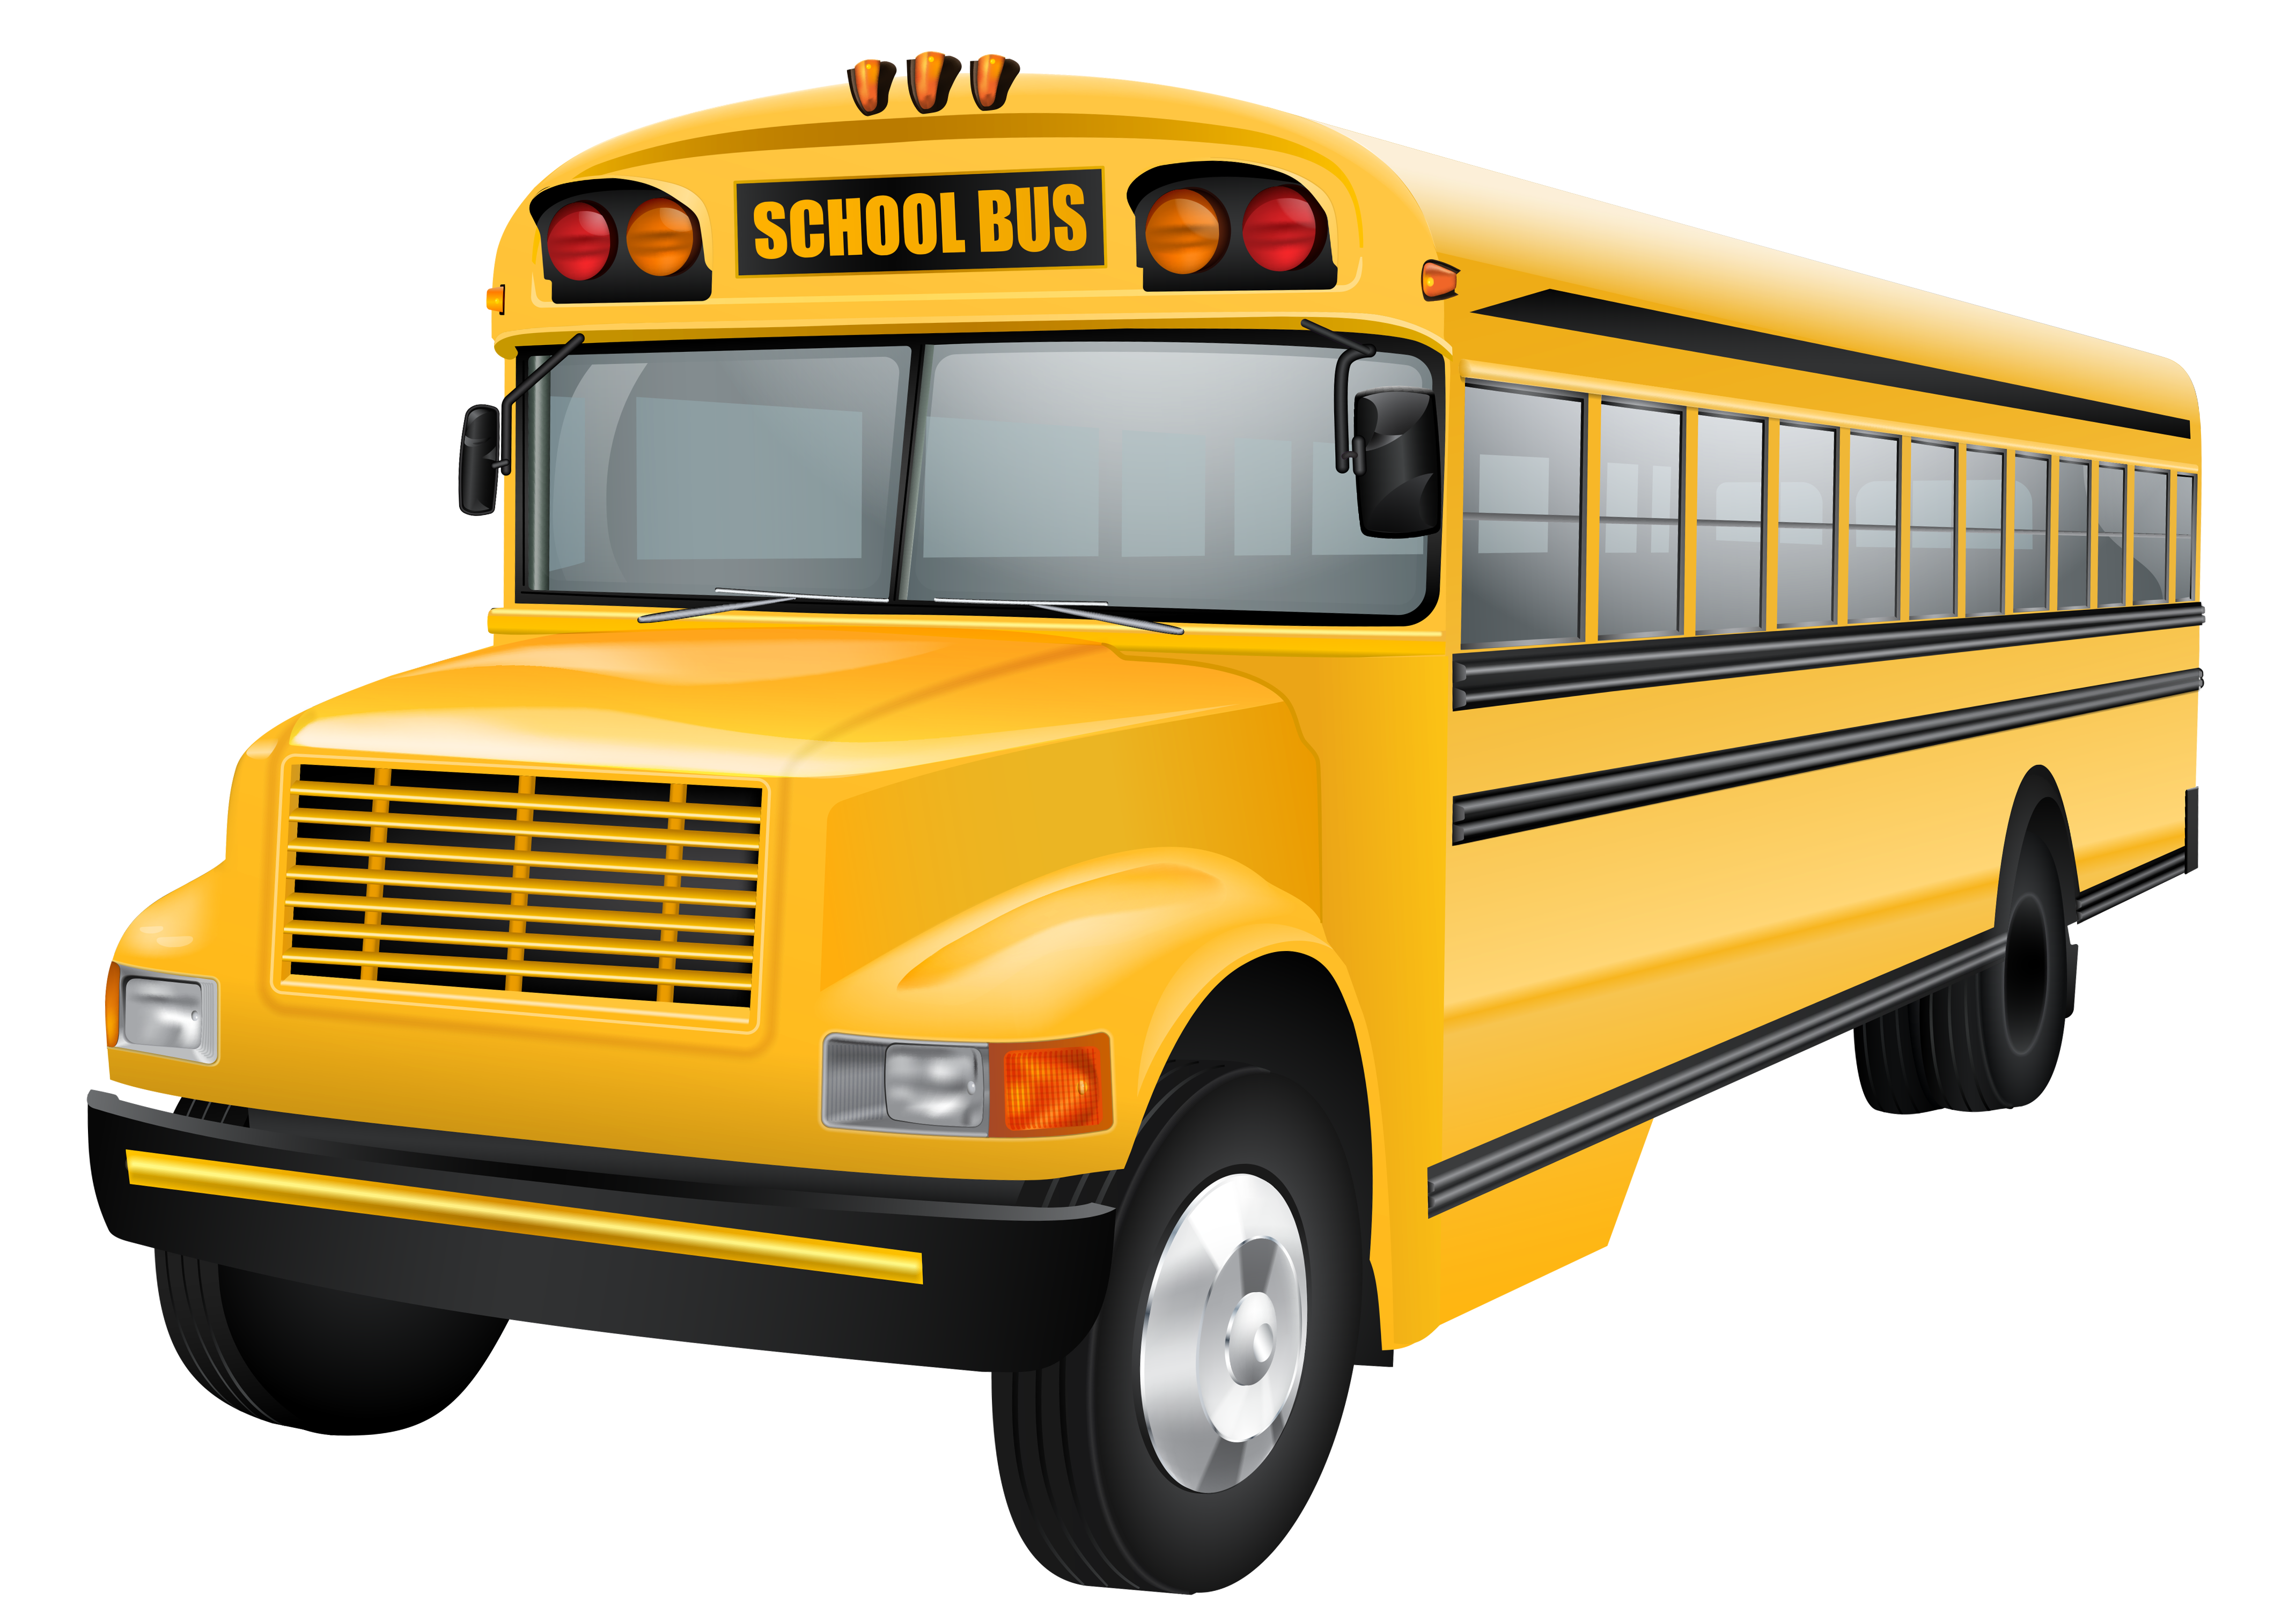 Free school bus clipart